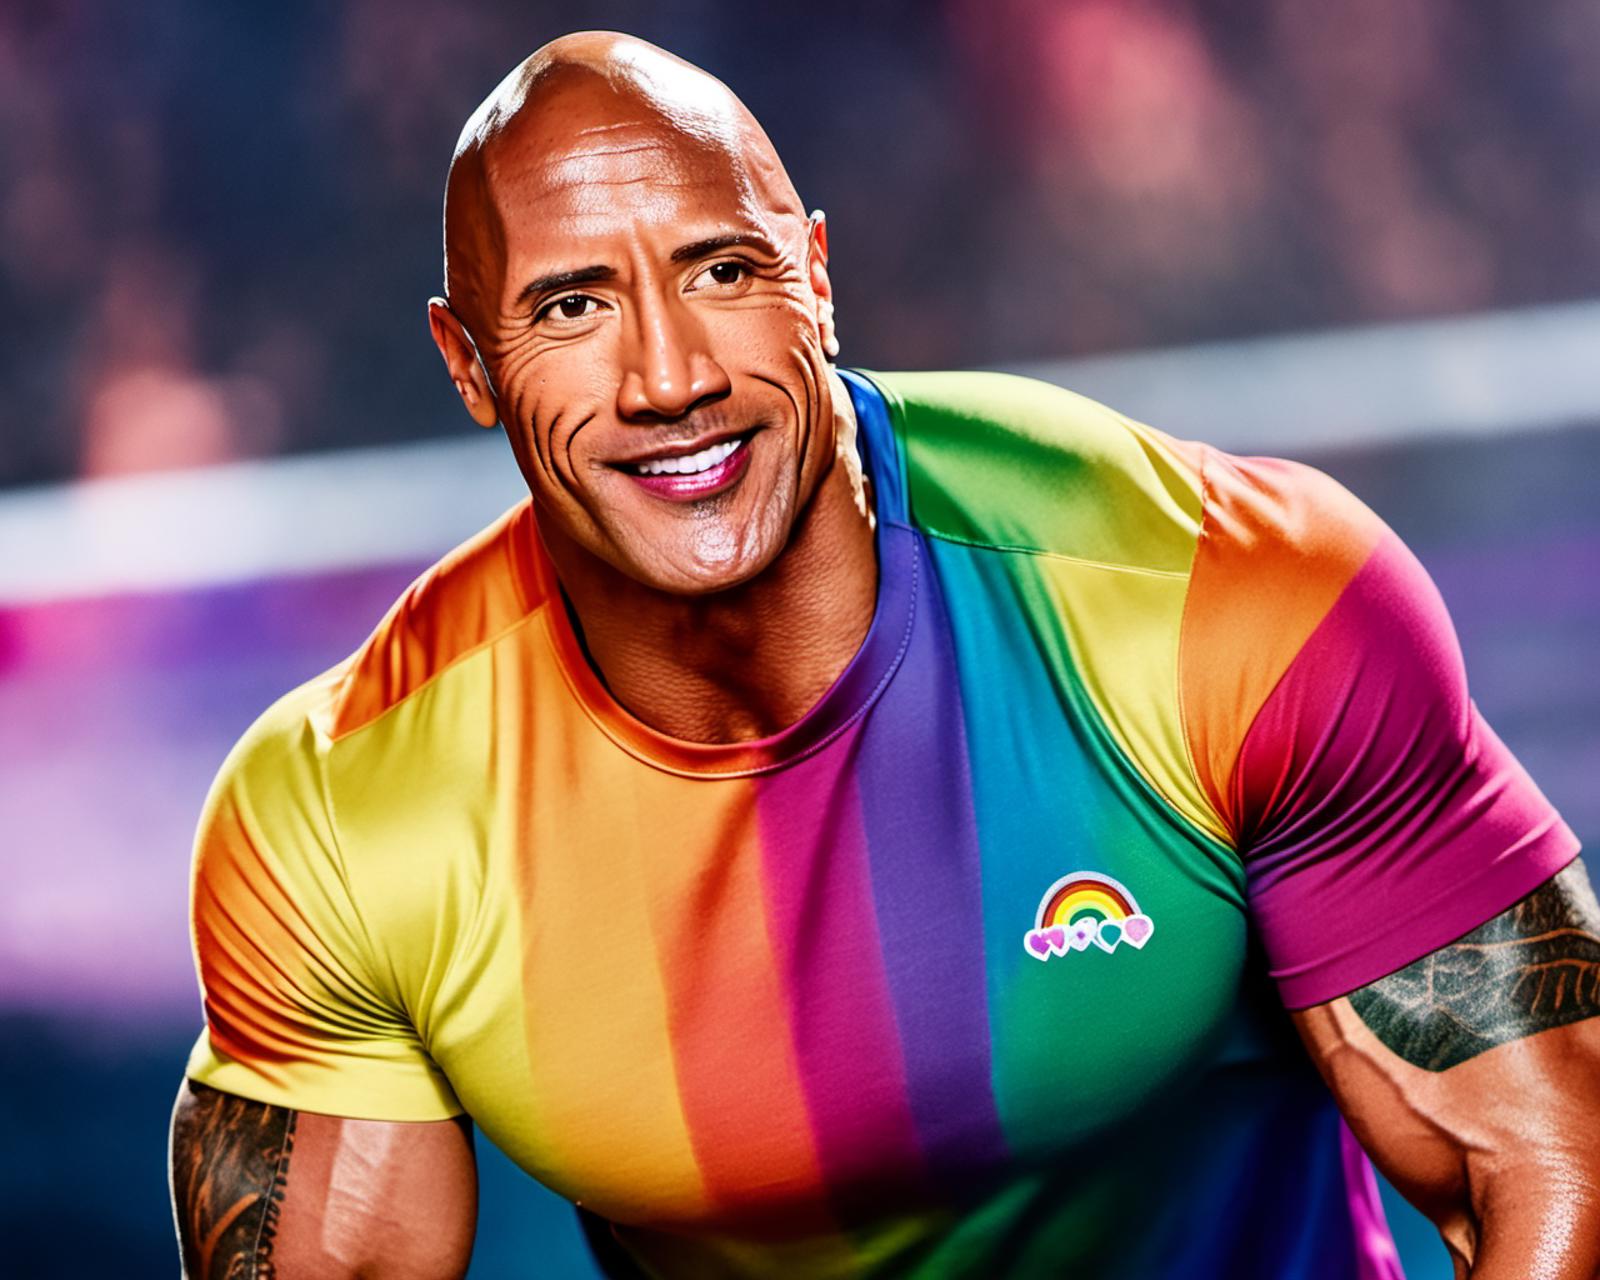 a photo of dwayne the_rock johnson wearing an LGBTQ+ rainbow shirt, realistic, photoreal, 8k, 4k, best quality, profession...